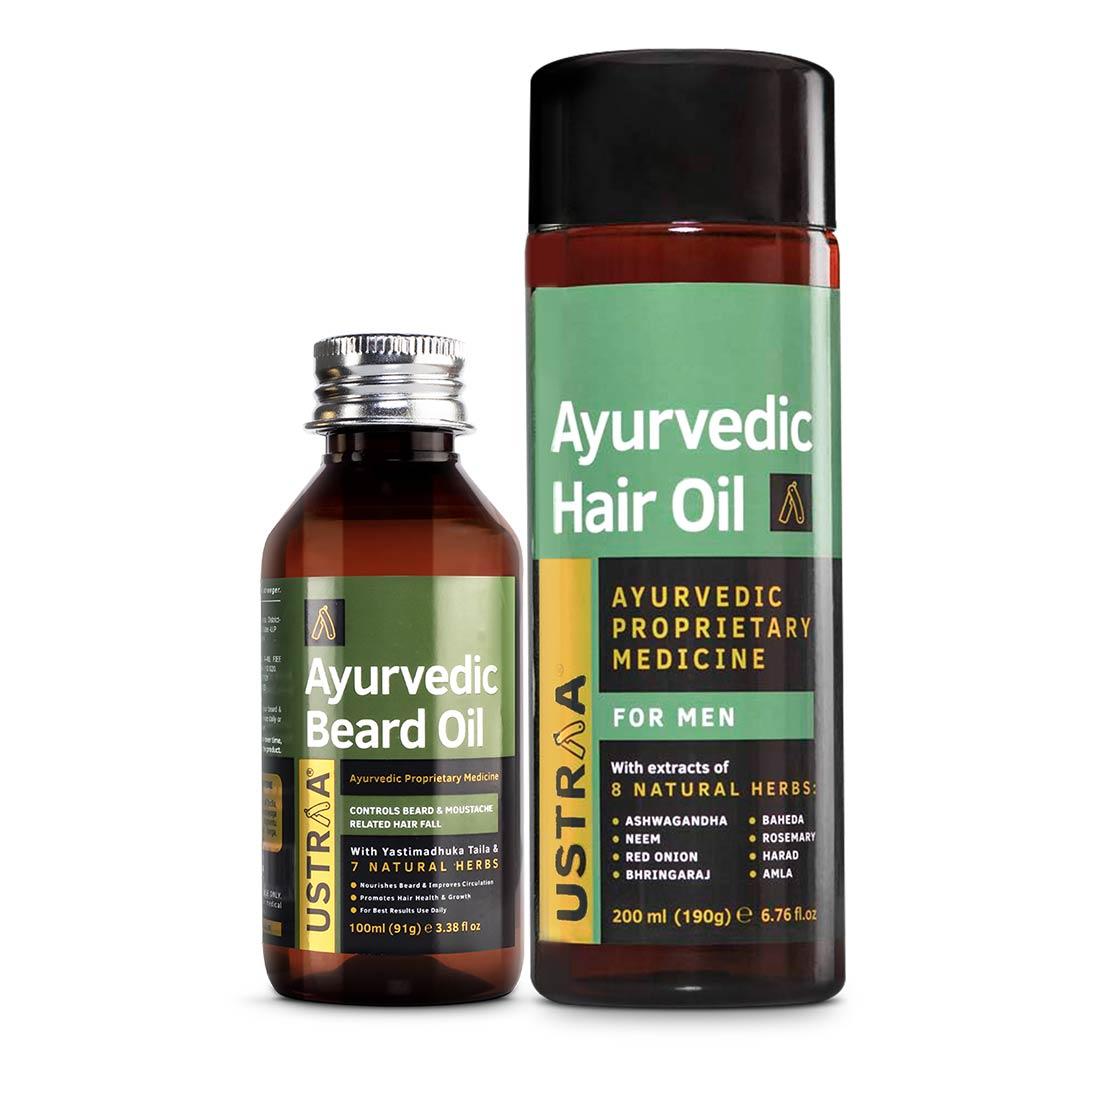 Ayurvedic Beard Oil & Ayurvedic Hair oil